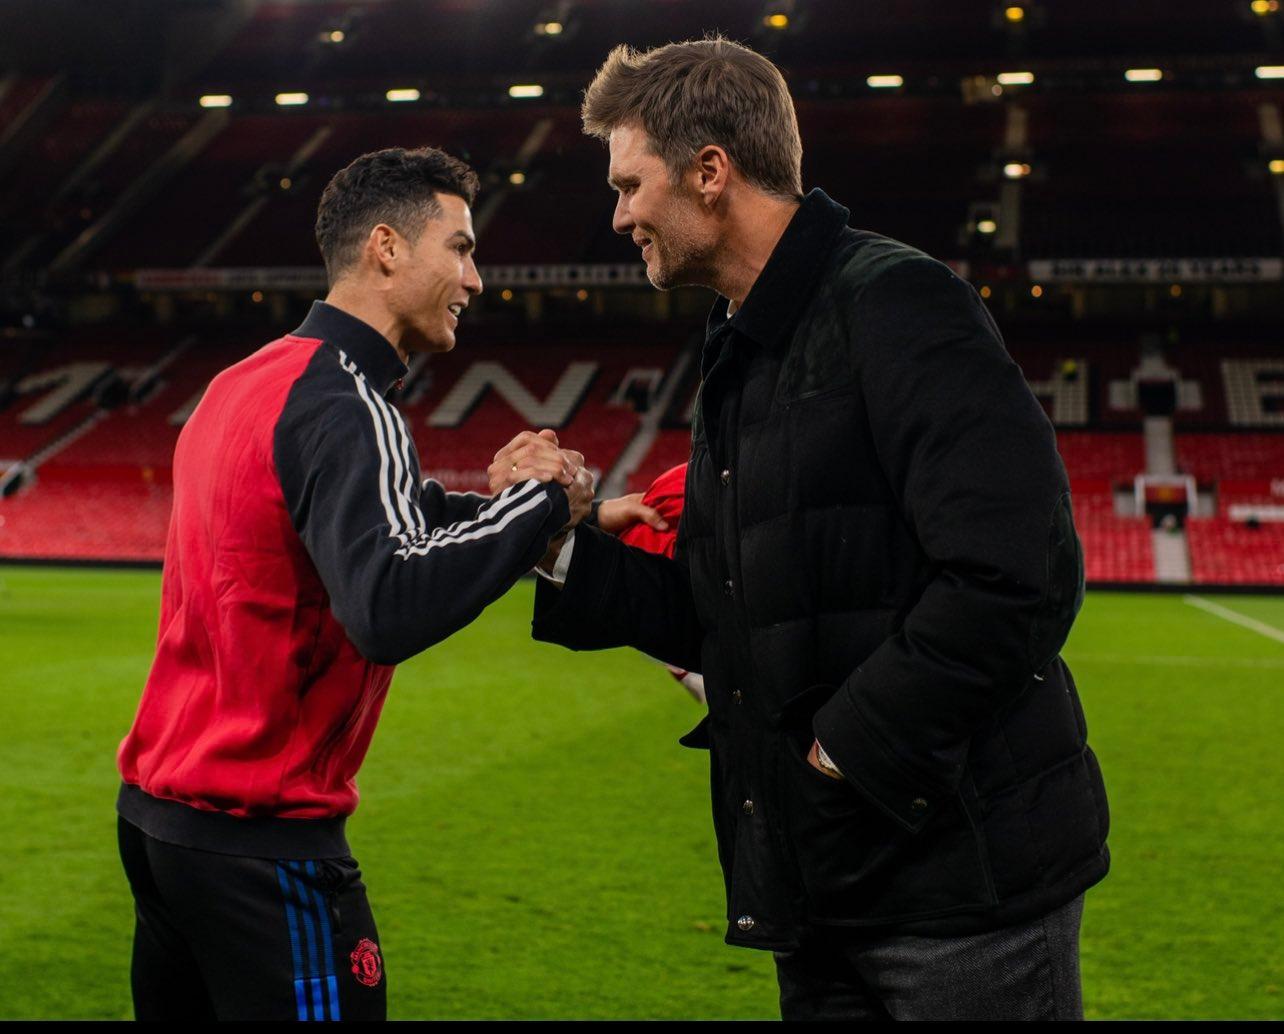 Tom Brady & Cristiano Ronaldo greeting each other at Old Trafford